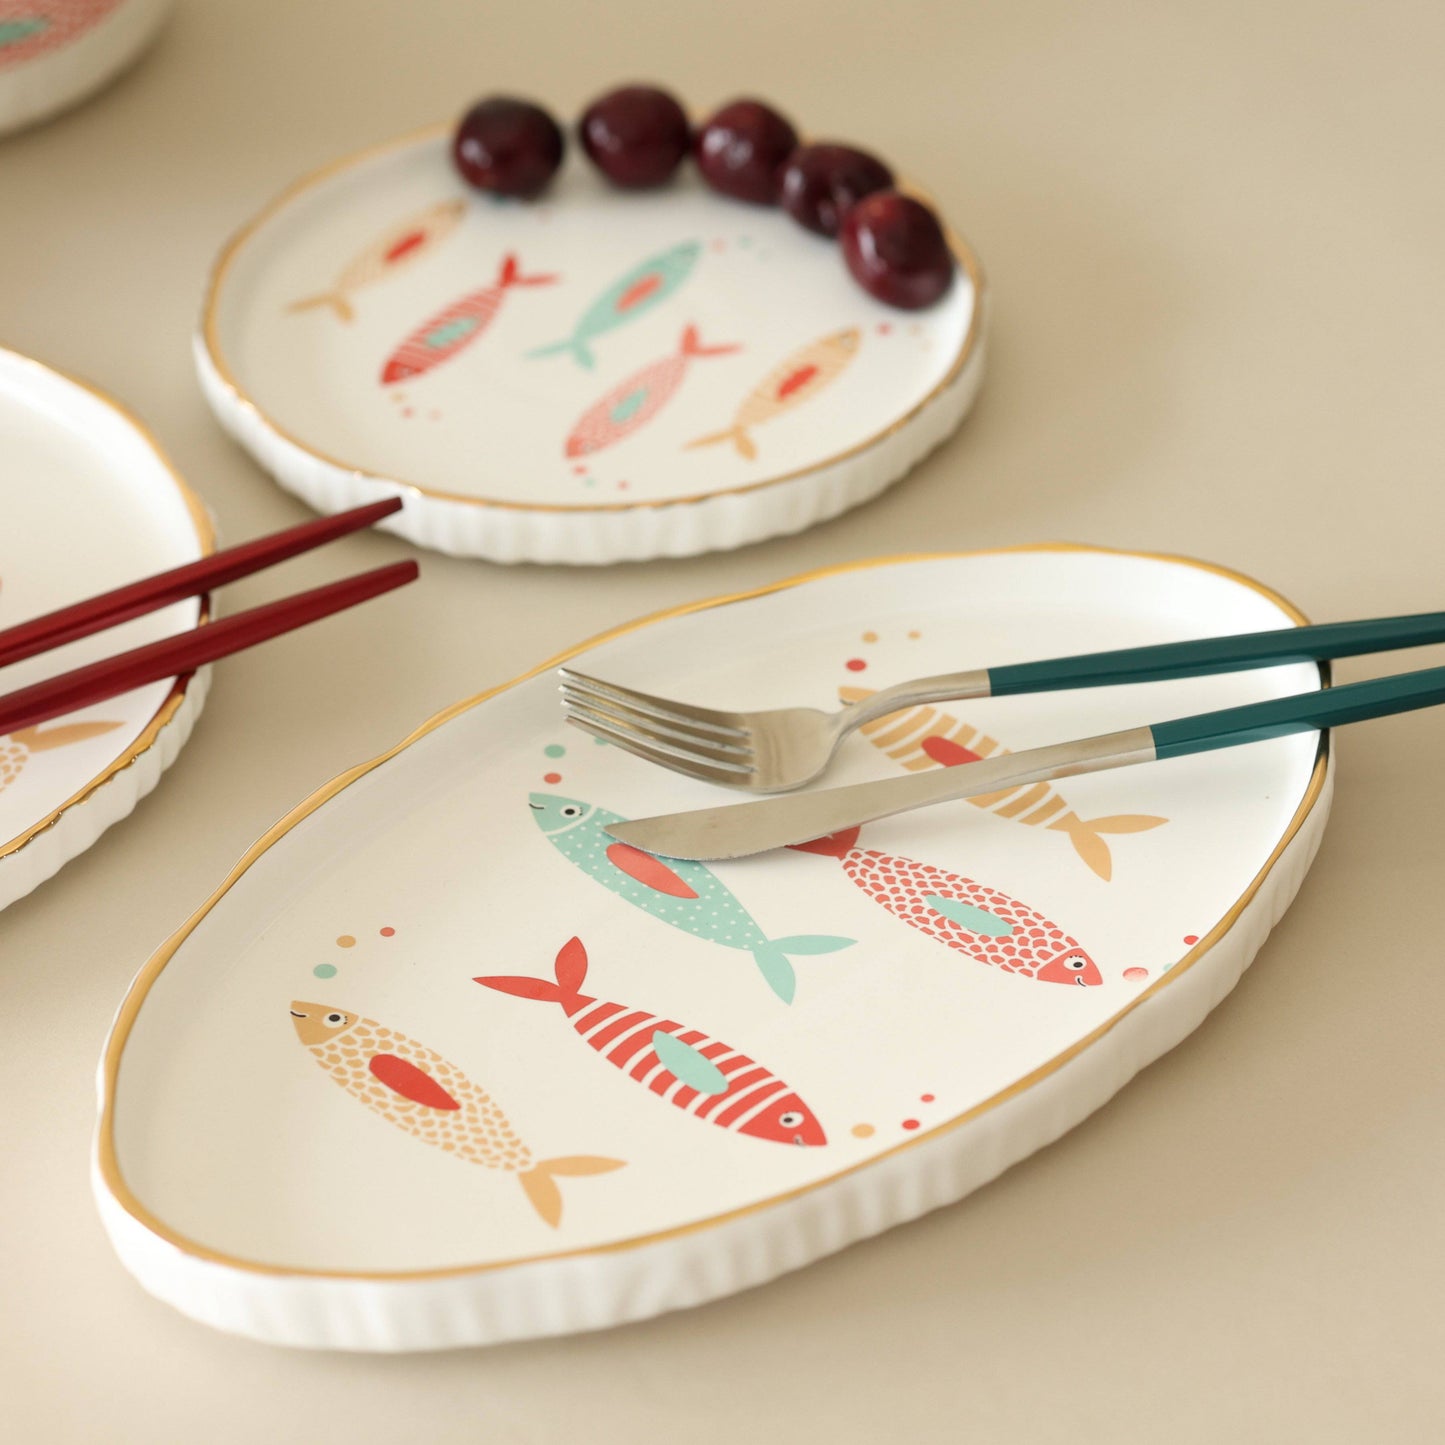 Gezellig Ceramic Oval Rice Plate | Pasta Platter